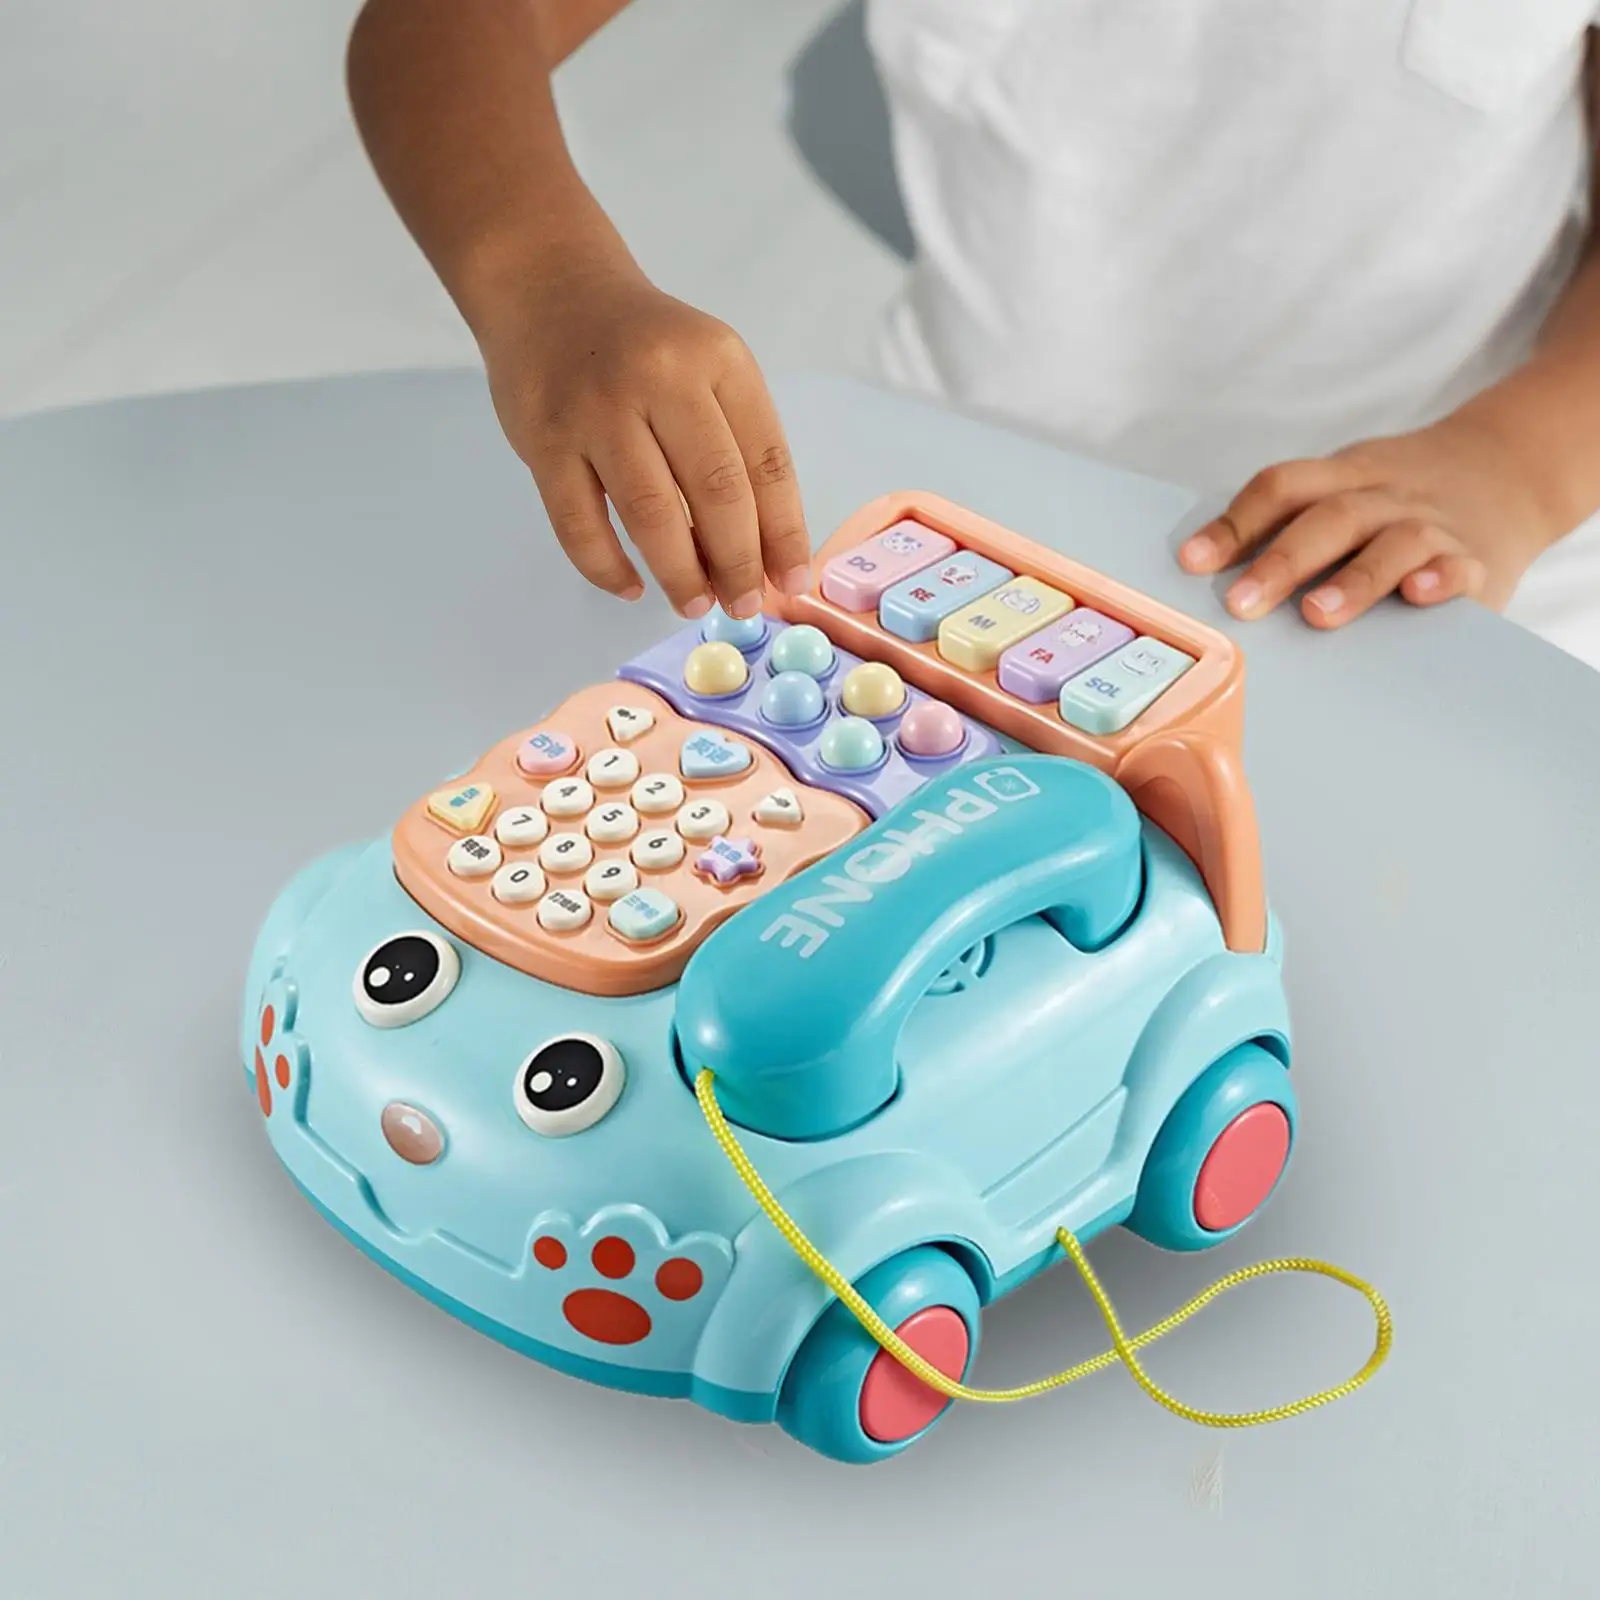 Toys Children Enlightenment Brain Toys for Kids Children Gifts